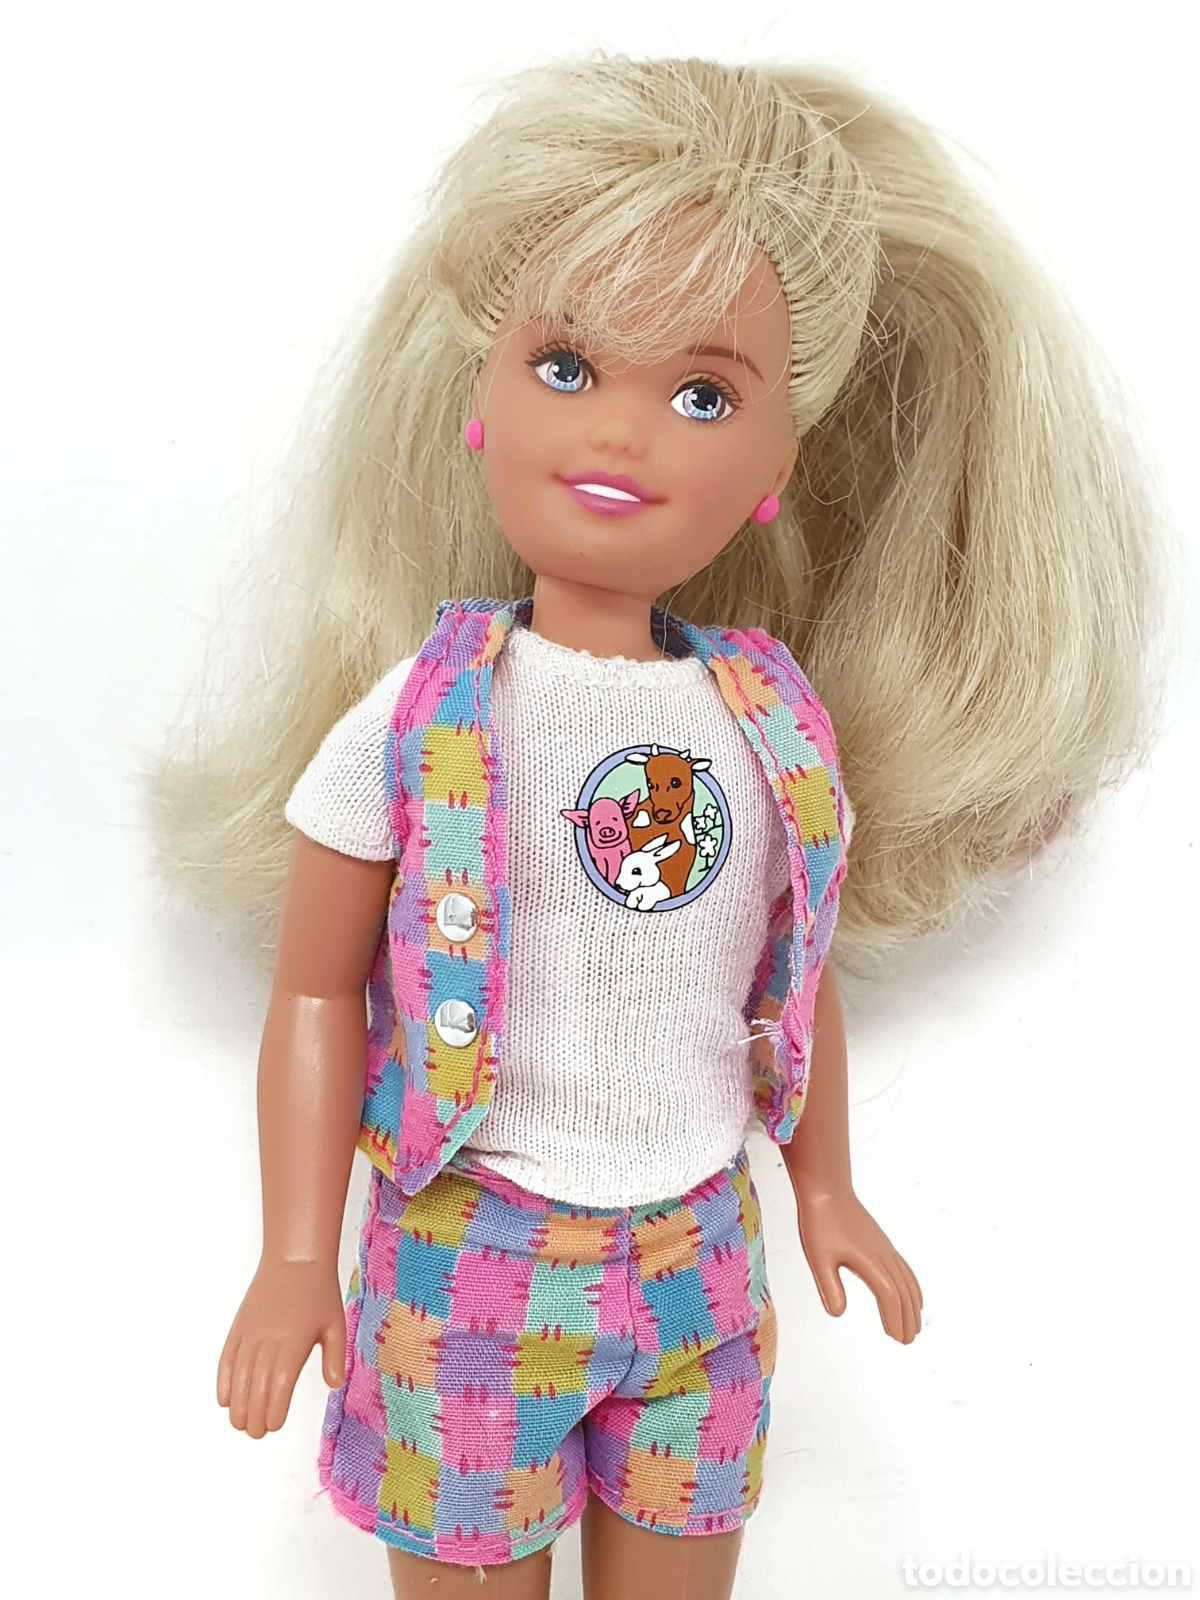 stacie de barbie lil' zoo pals, mattel 1998 - Buy Barbie and Ken